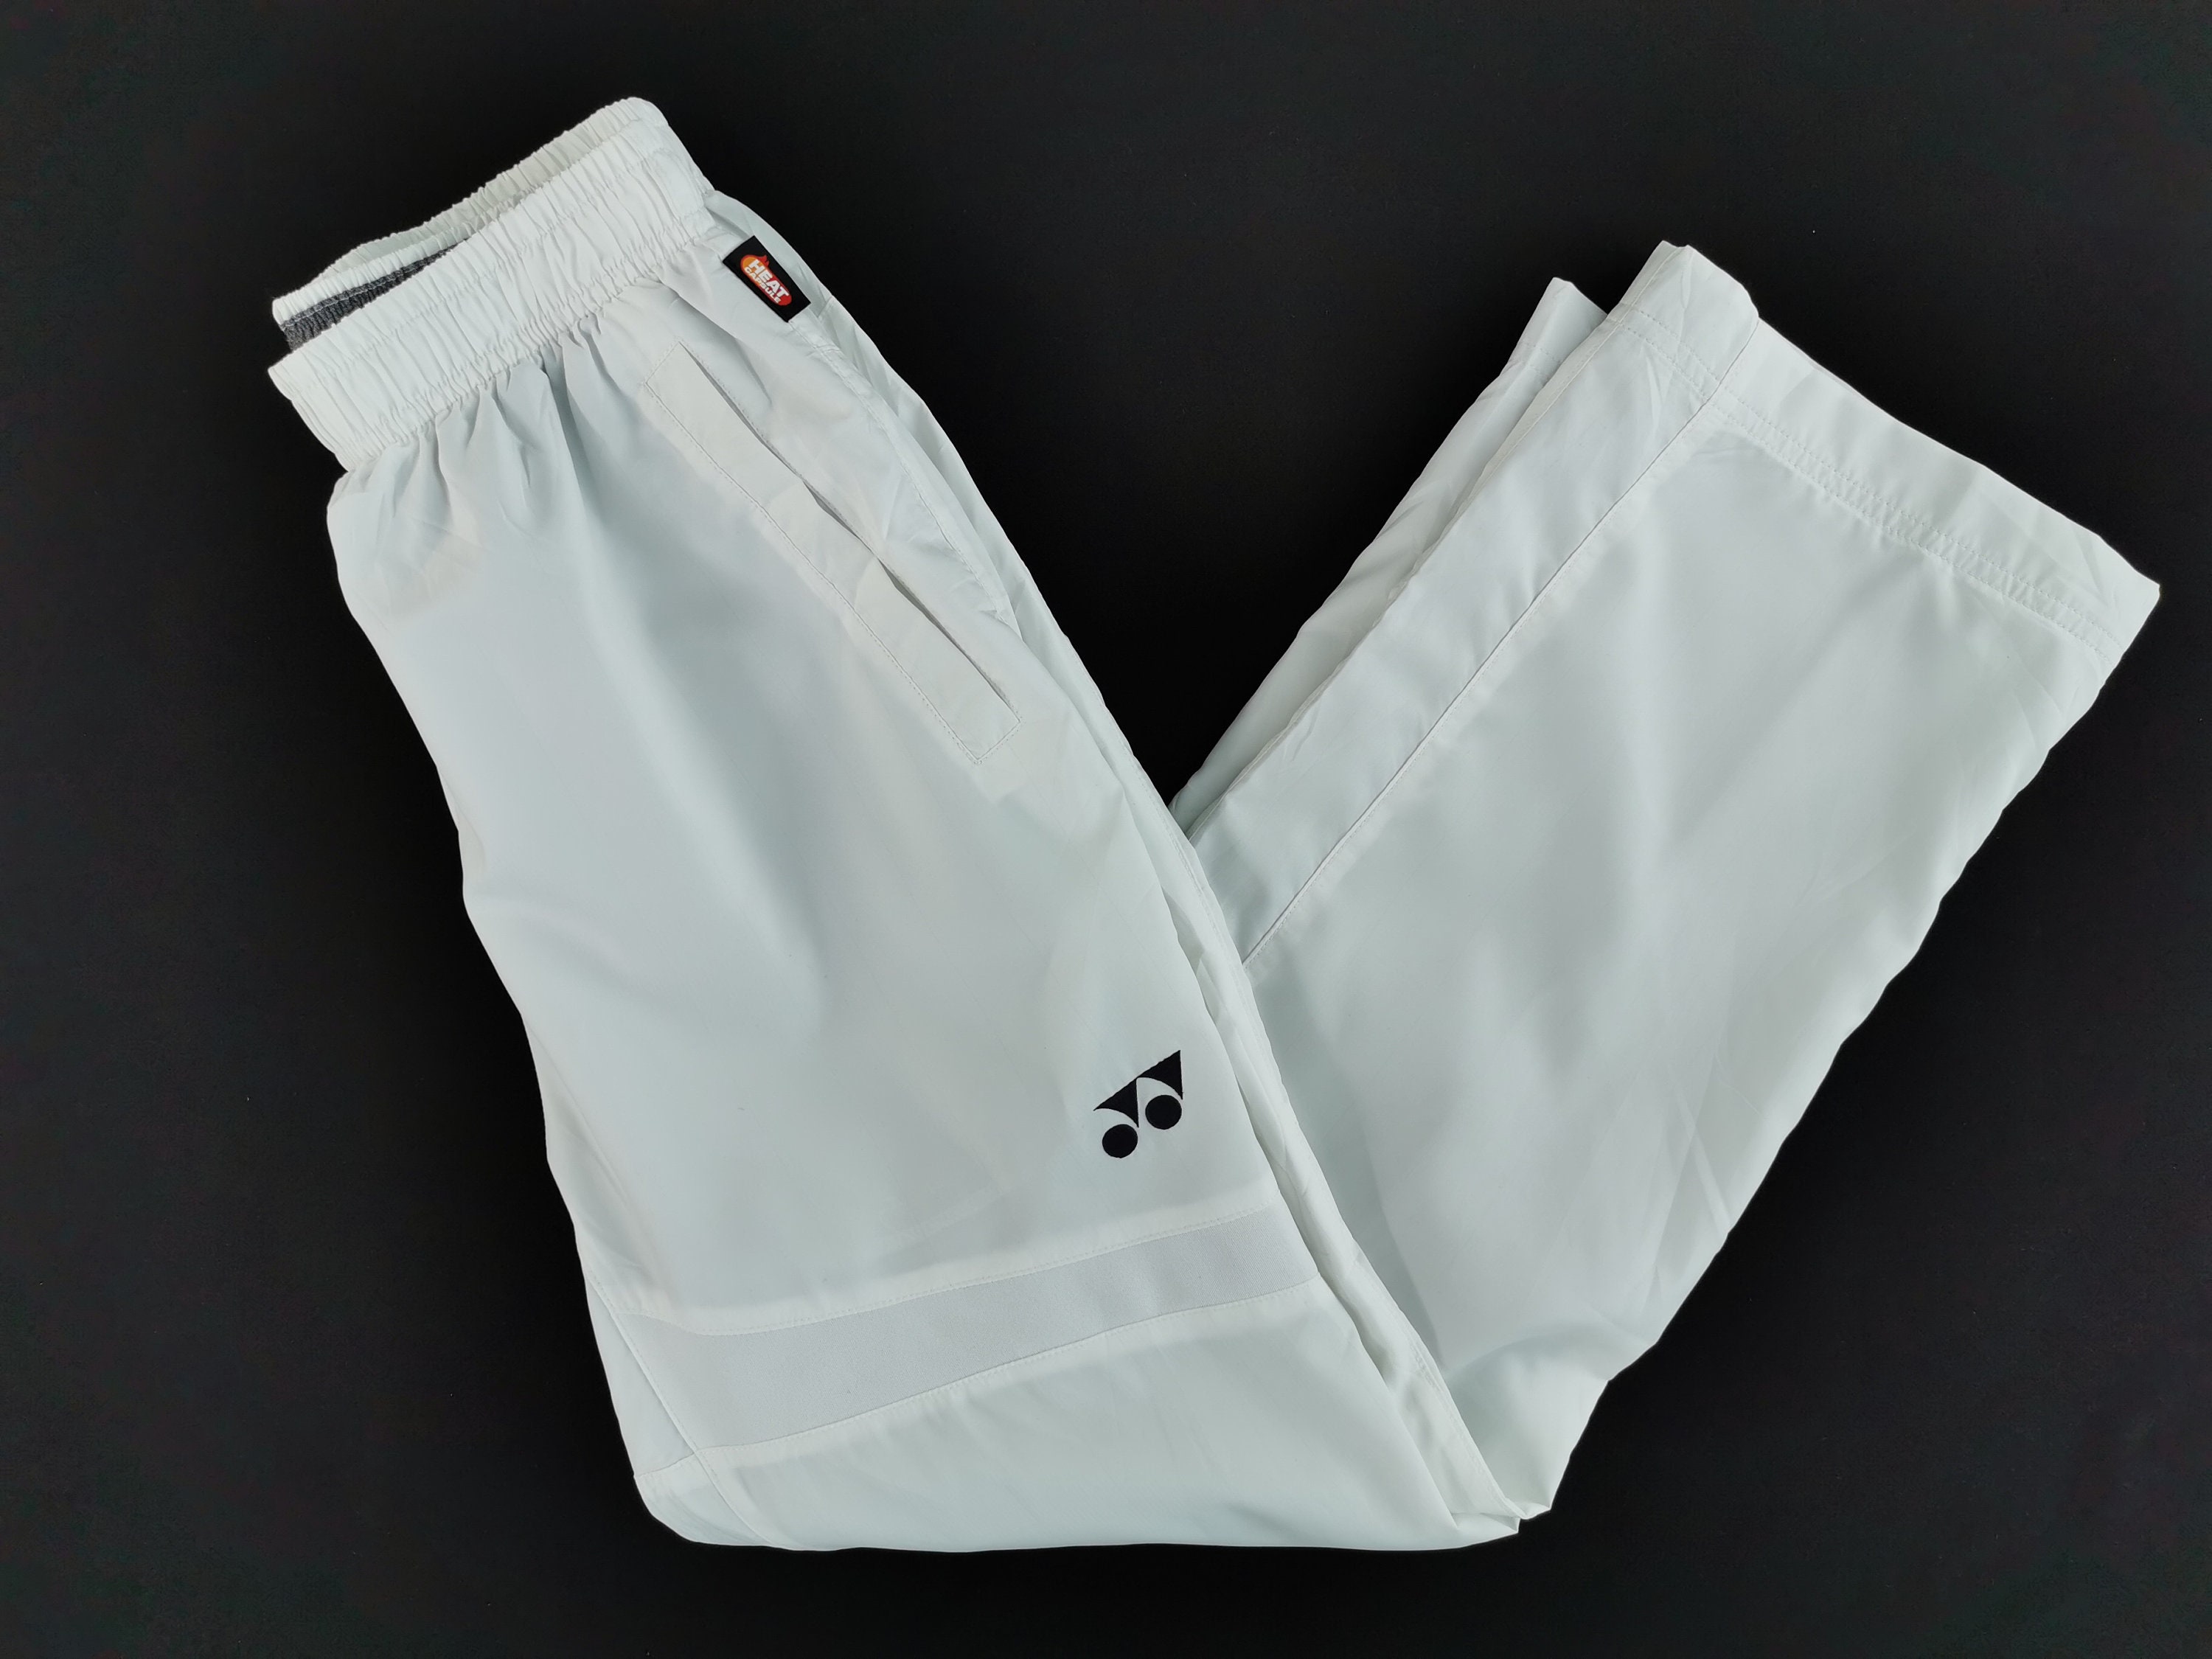 Yonex 75th Warm-up Pants Womens 67064AEX WHITE